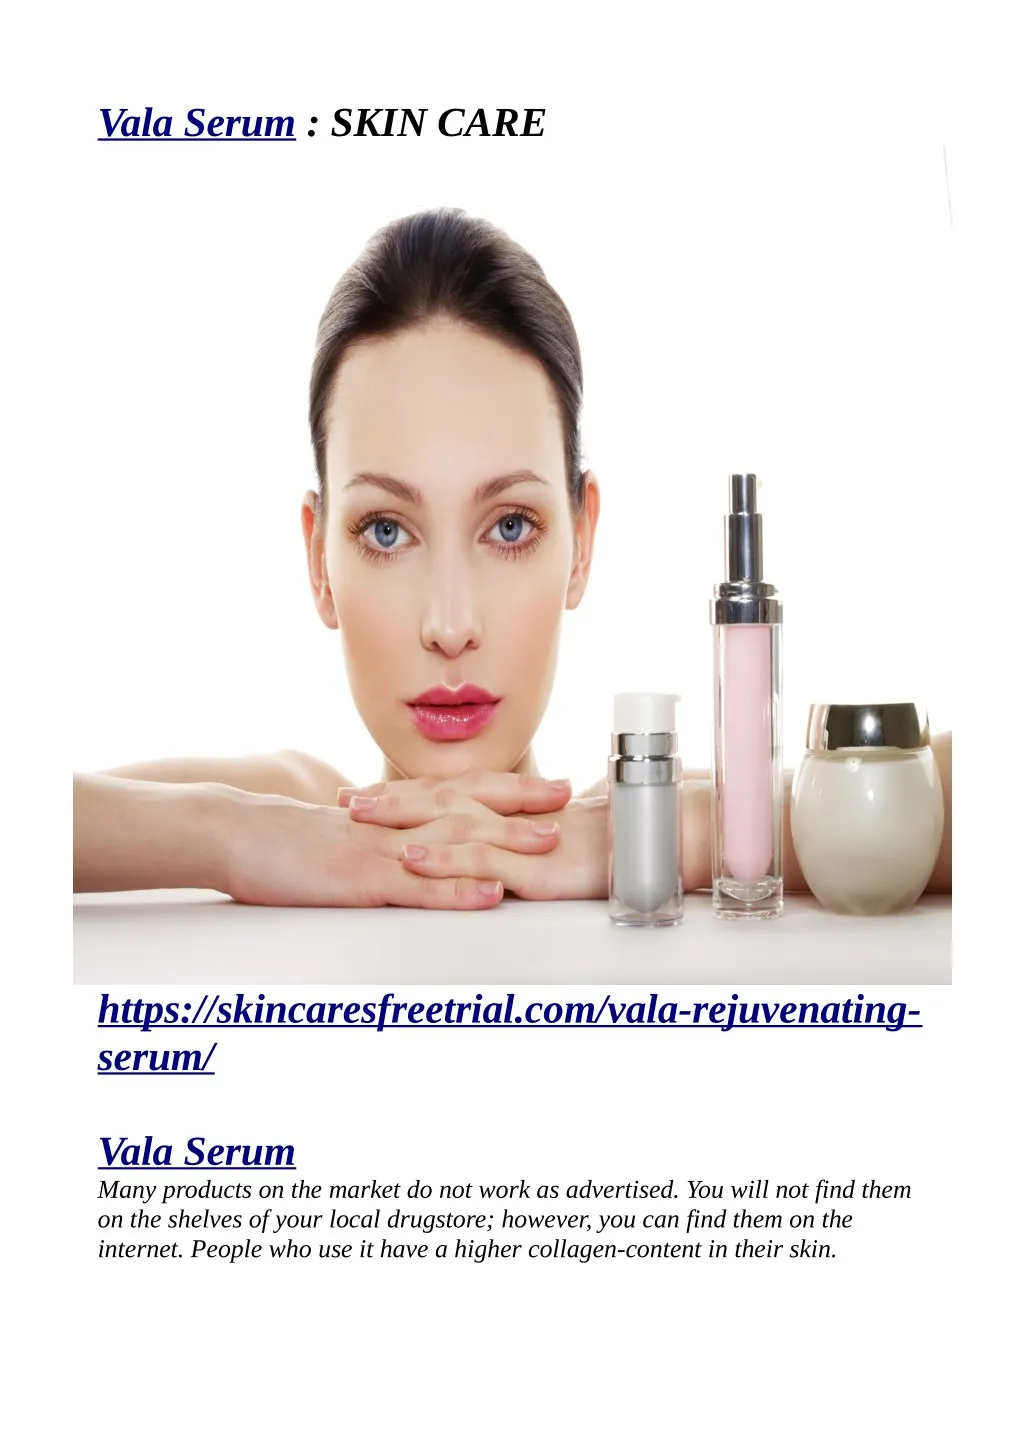 vala serum skin care